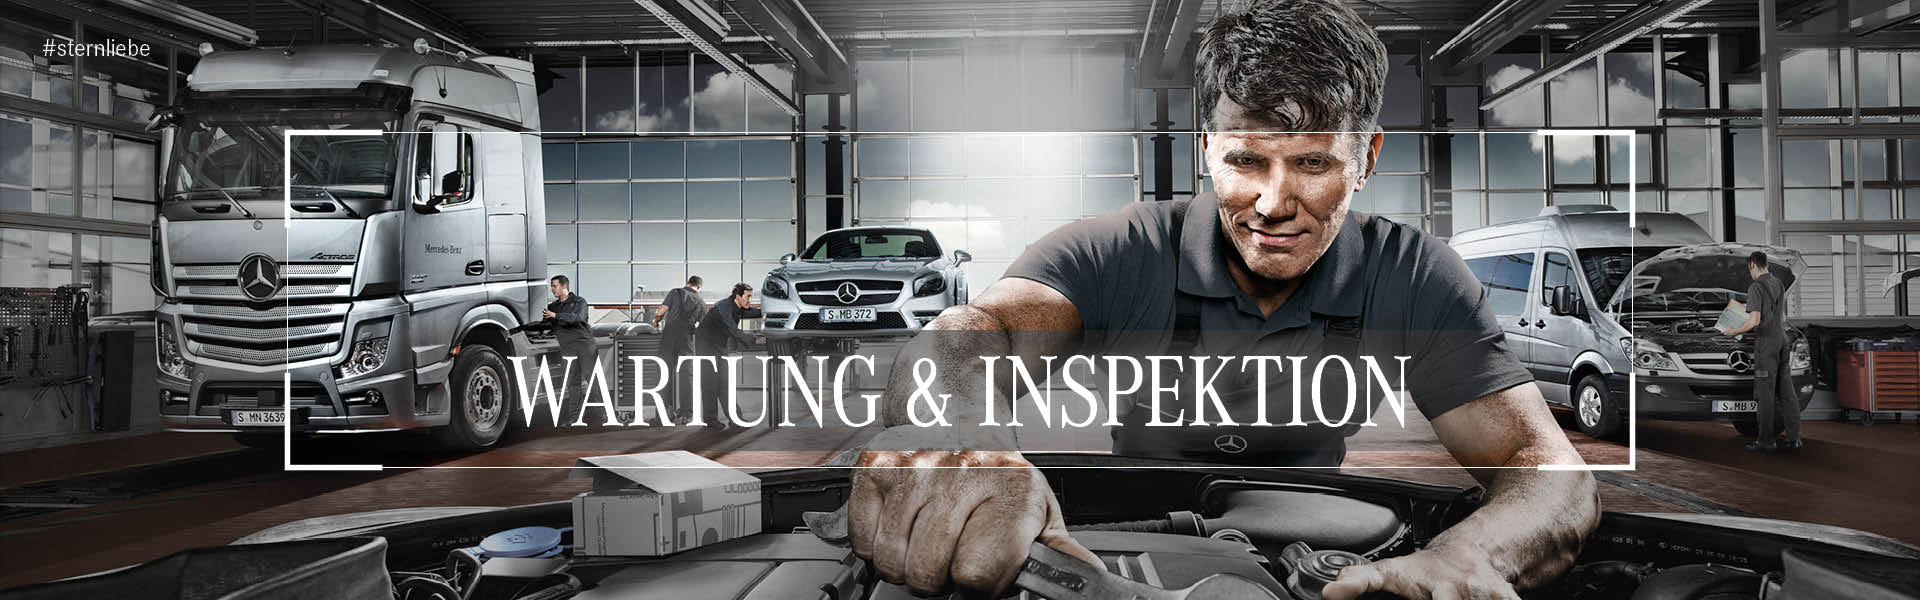 Mercedes Benz brinkmann -Wartung-Inspektion